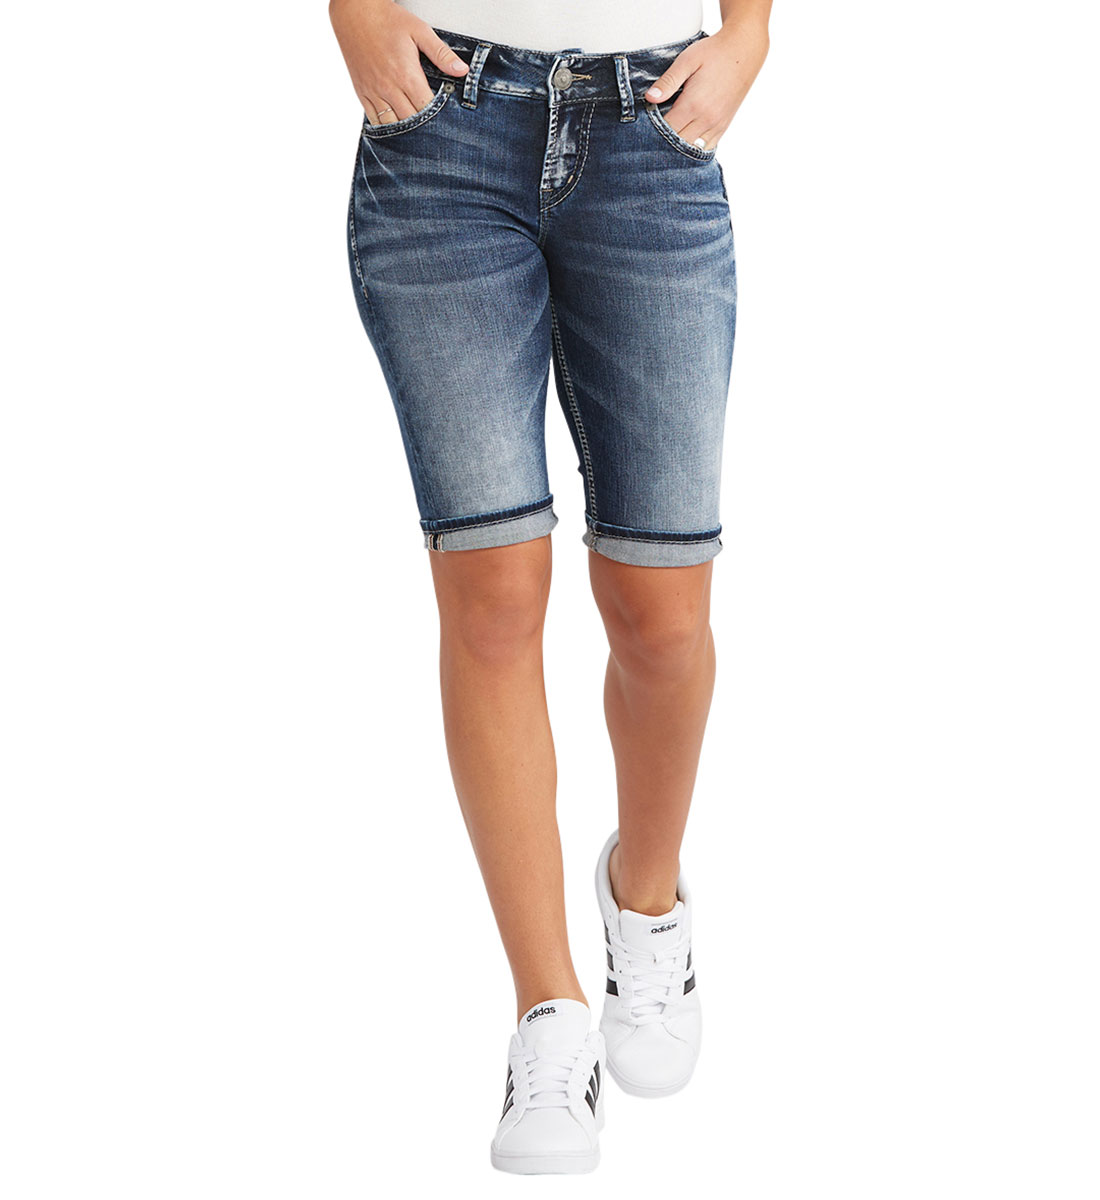 silver jeans bermuda shorts